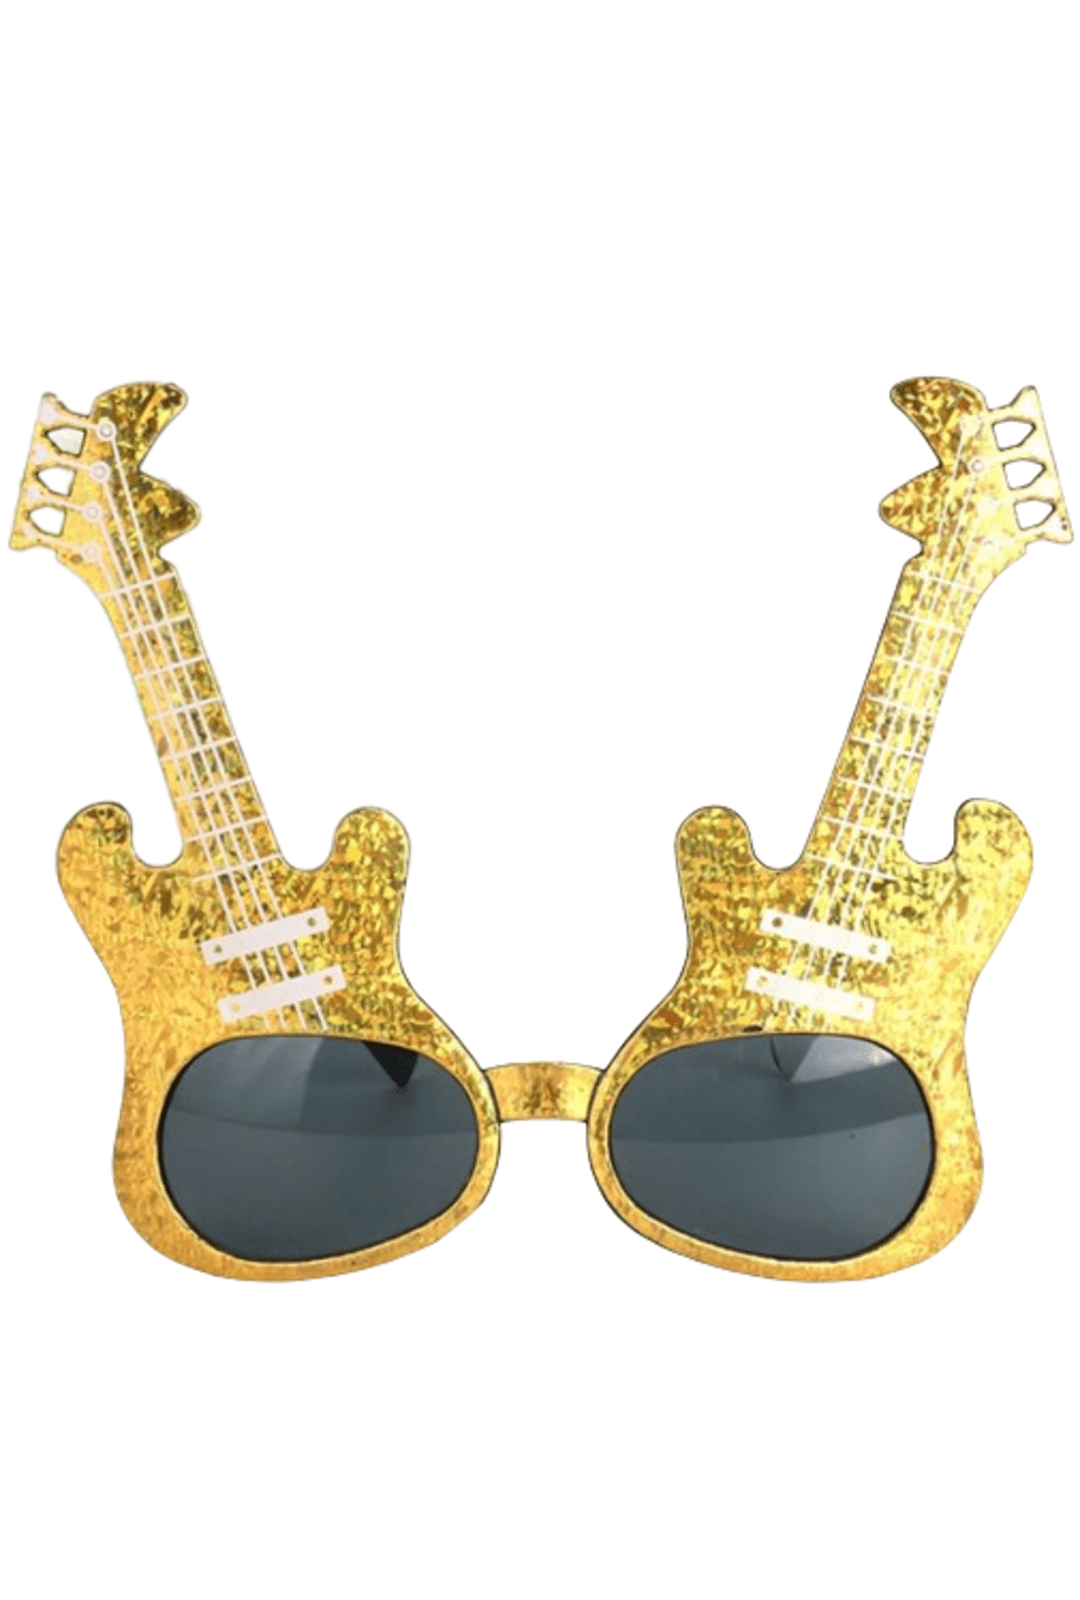 Gold Guitar Glasses